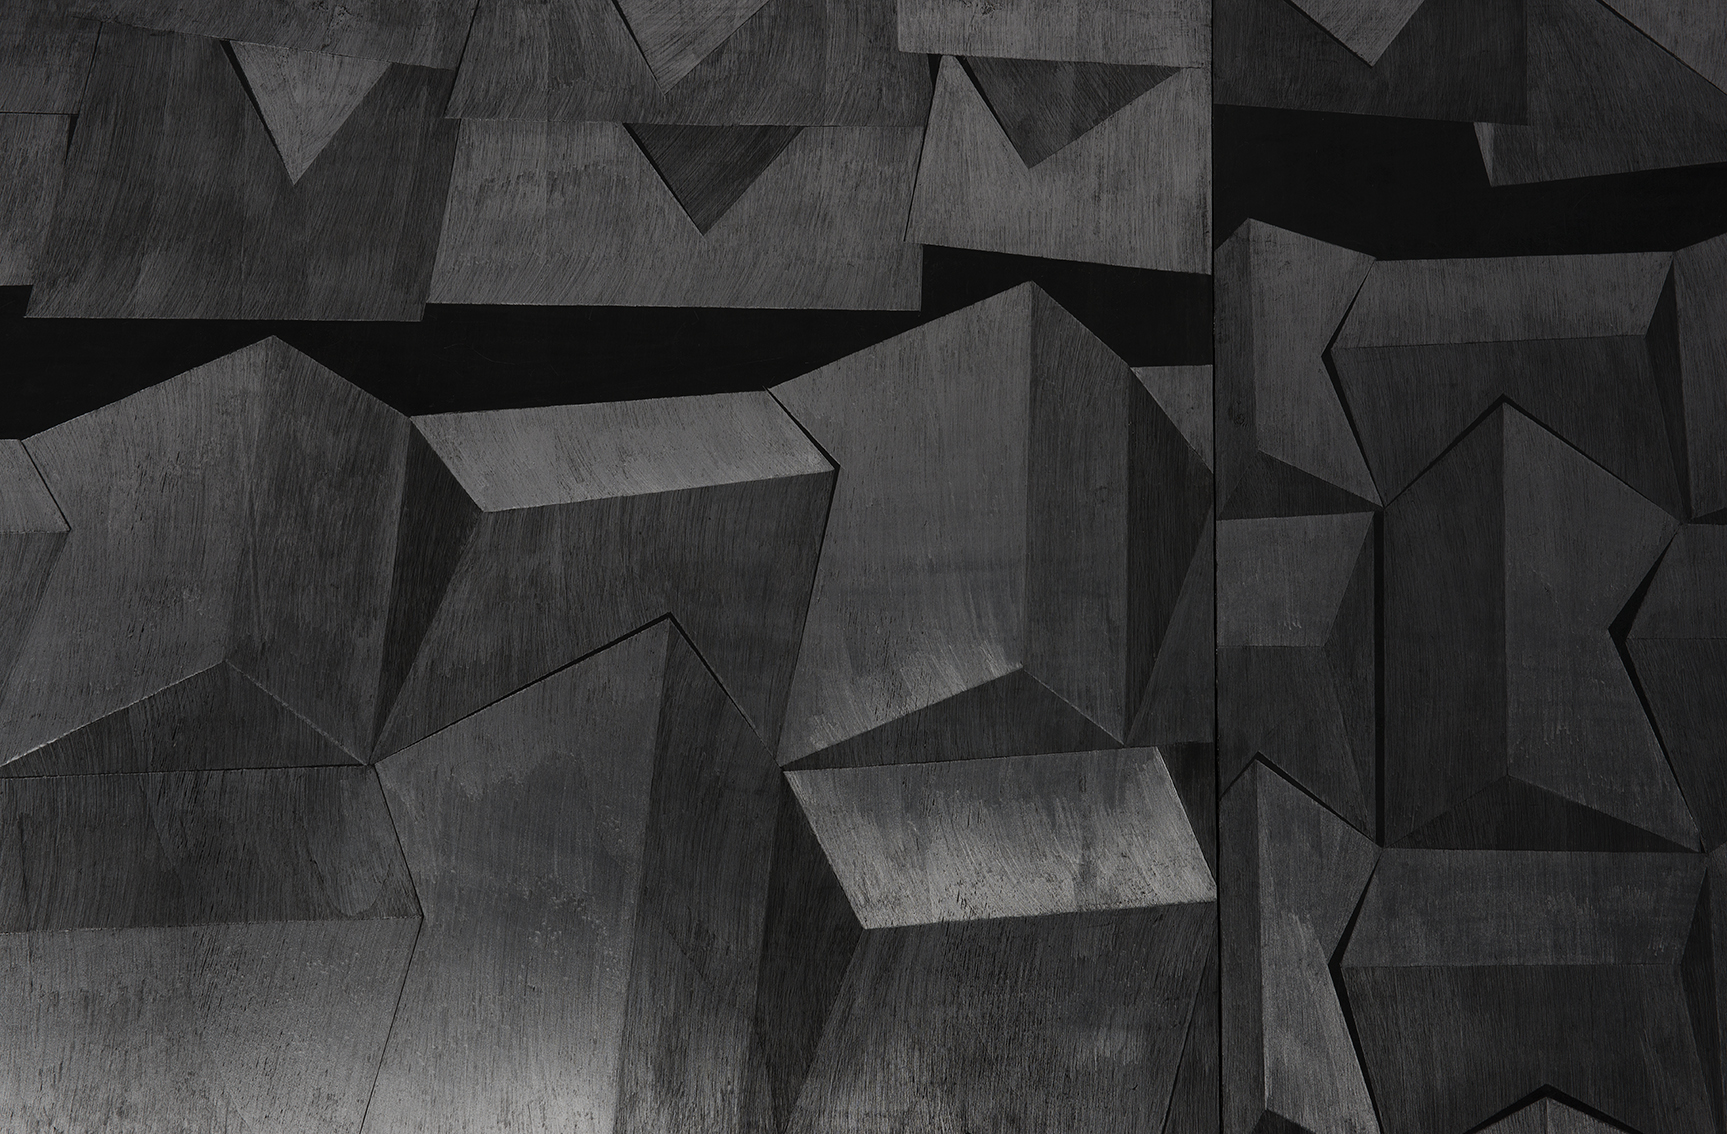 Hado, פחם וגרפיט על עץ, פרט מתוך מיצב, 2014 (4).jpg